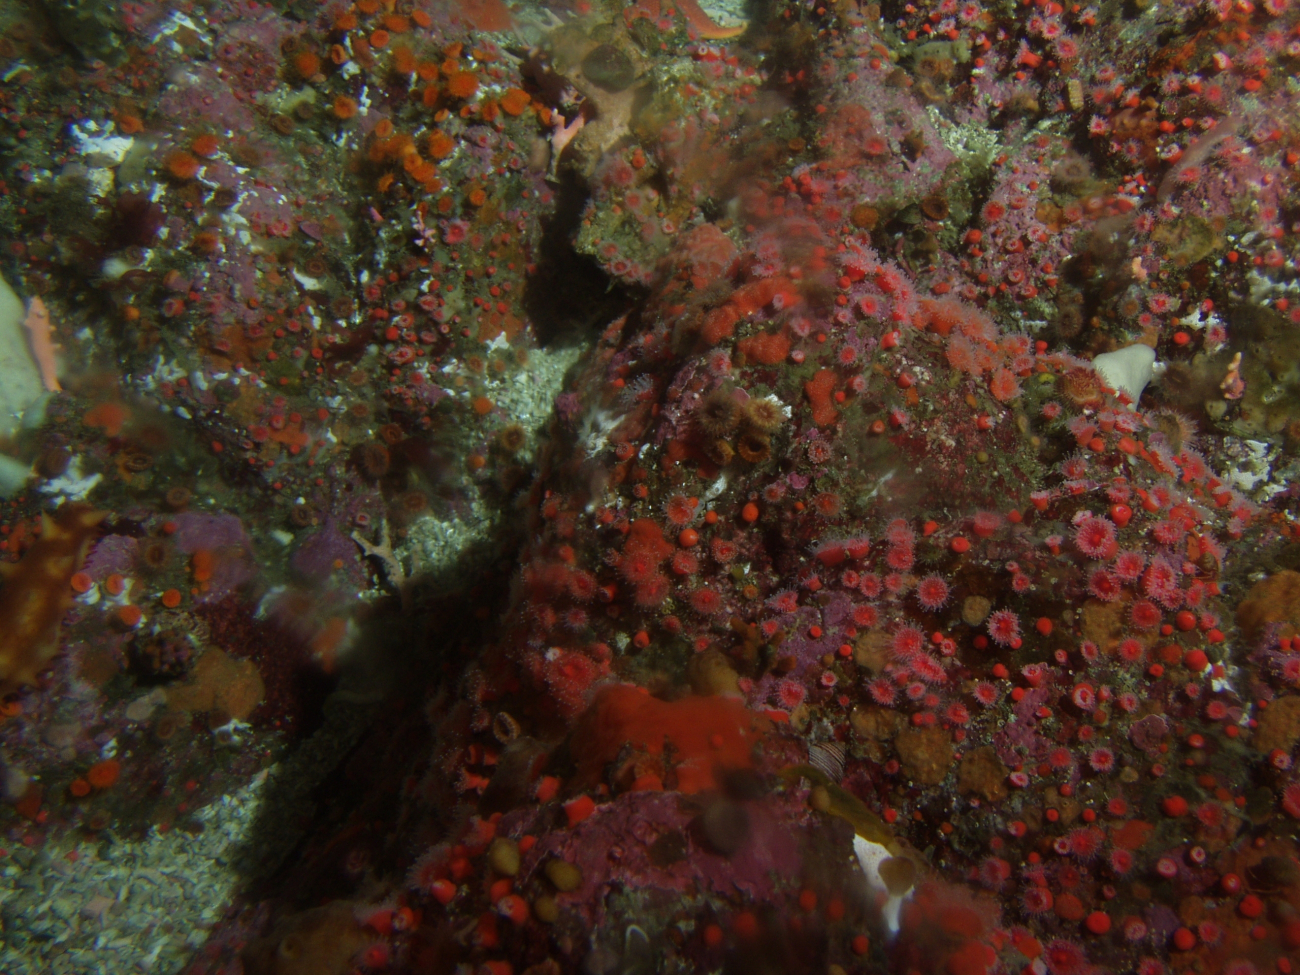 Orange cup coral and sponges on boulder in rocky reef habitat